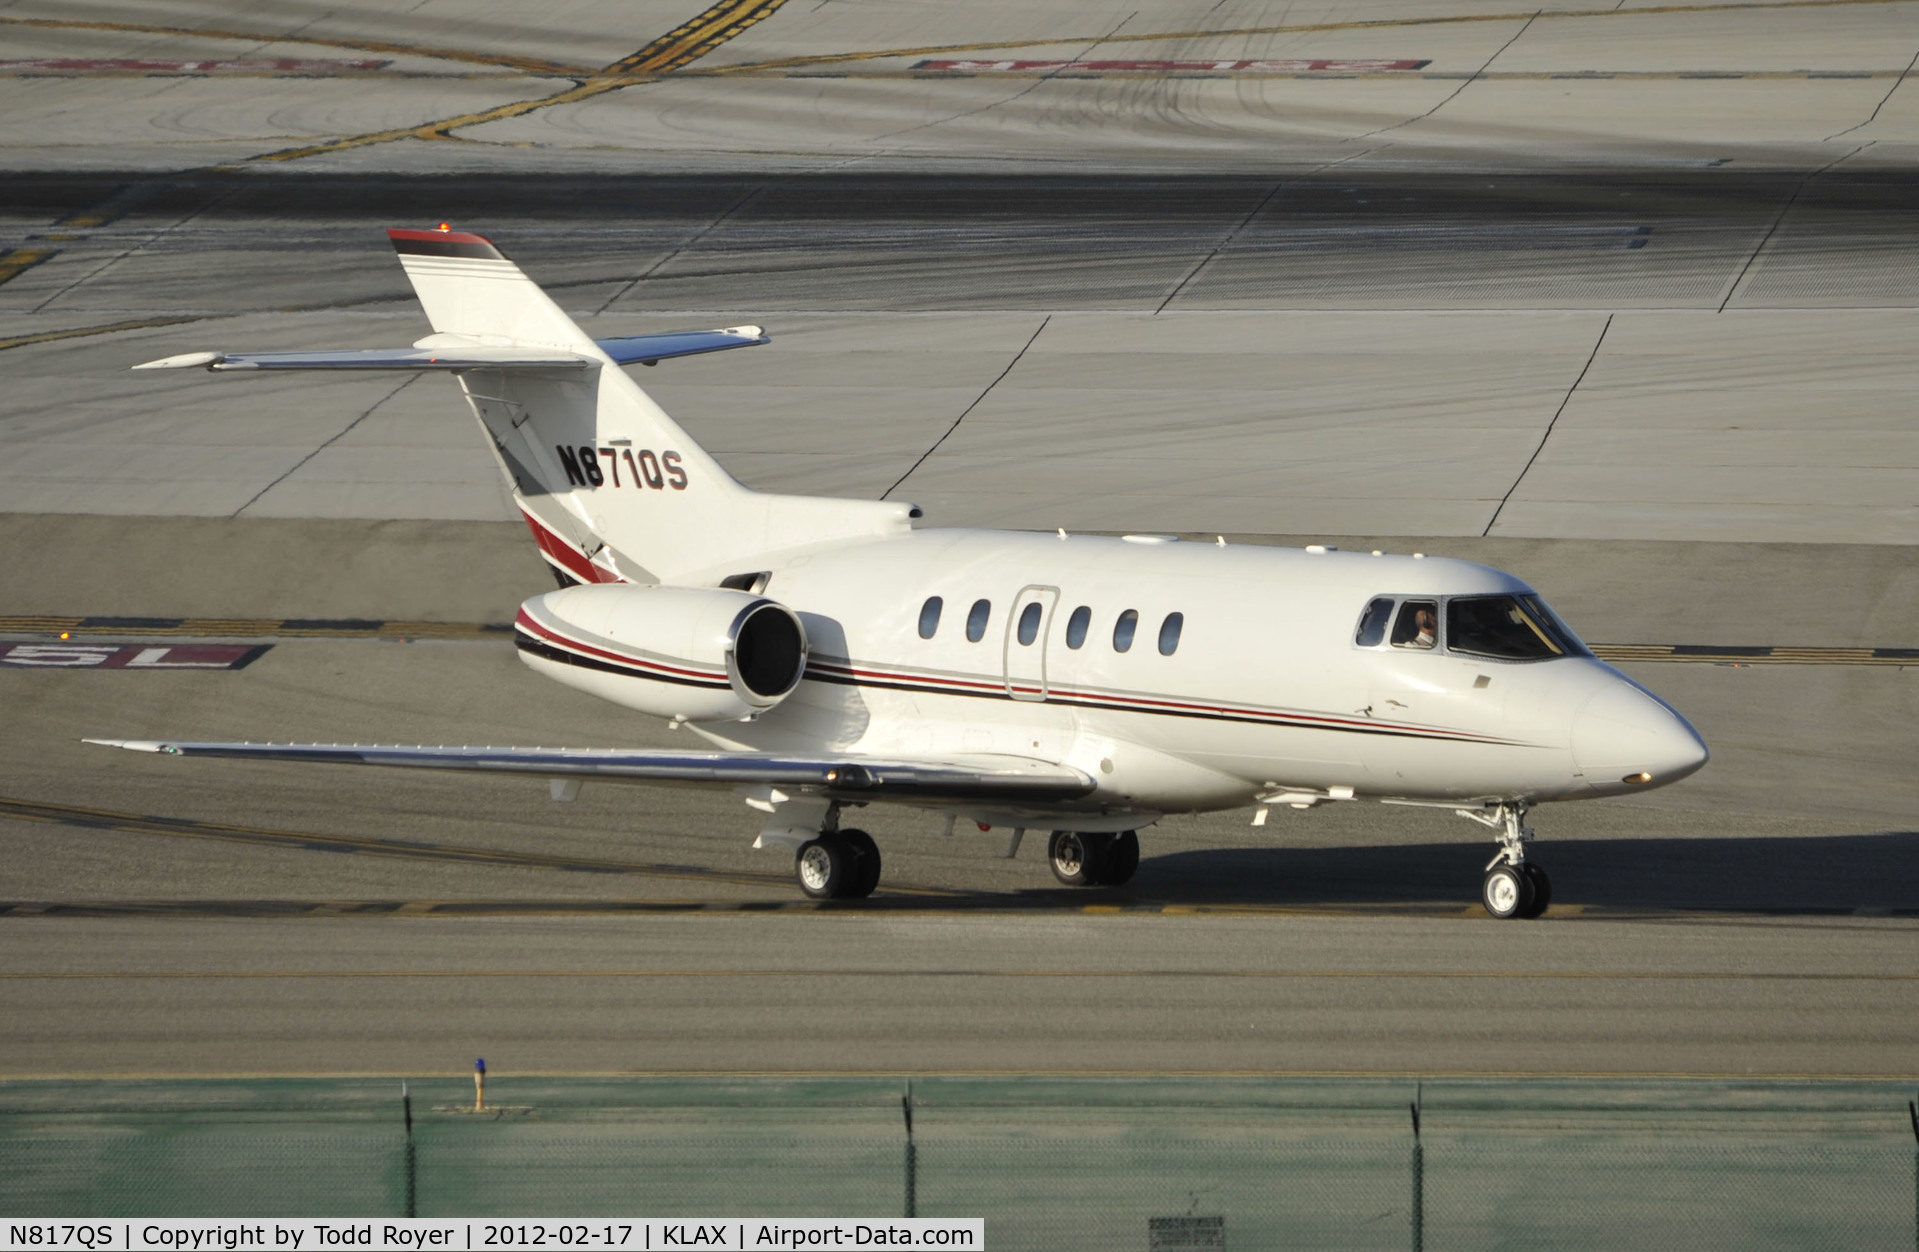 N817QS, 2001 Raytheon Hawker 800XP C/N 258517, Taxiing to parking at LAX